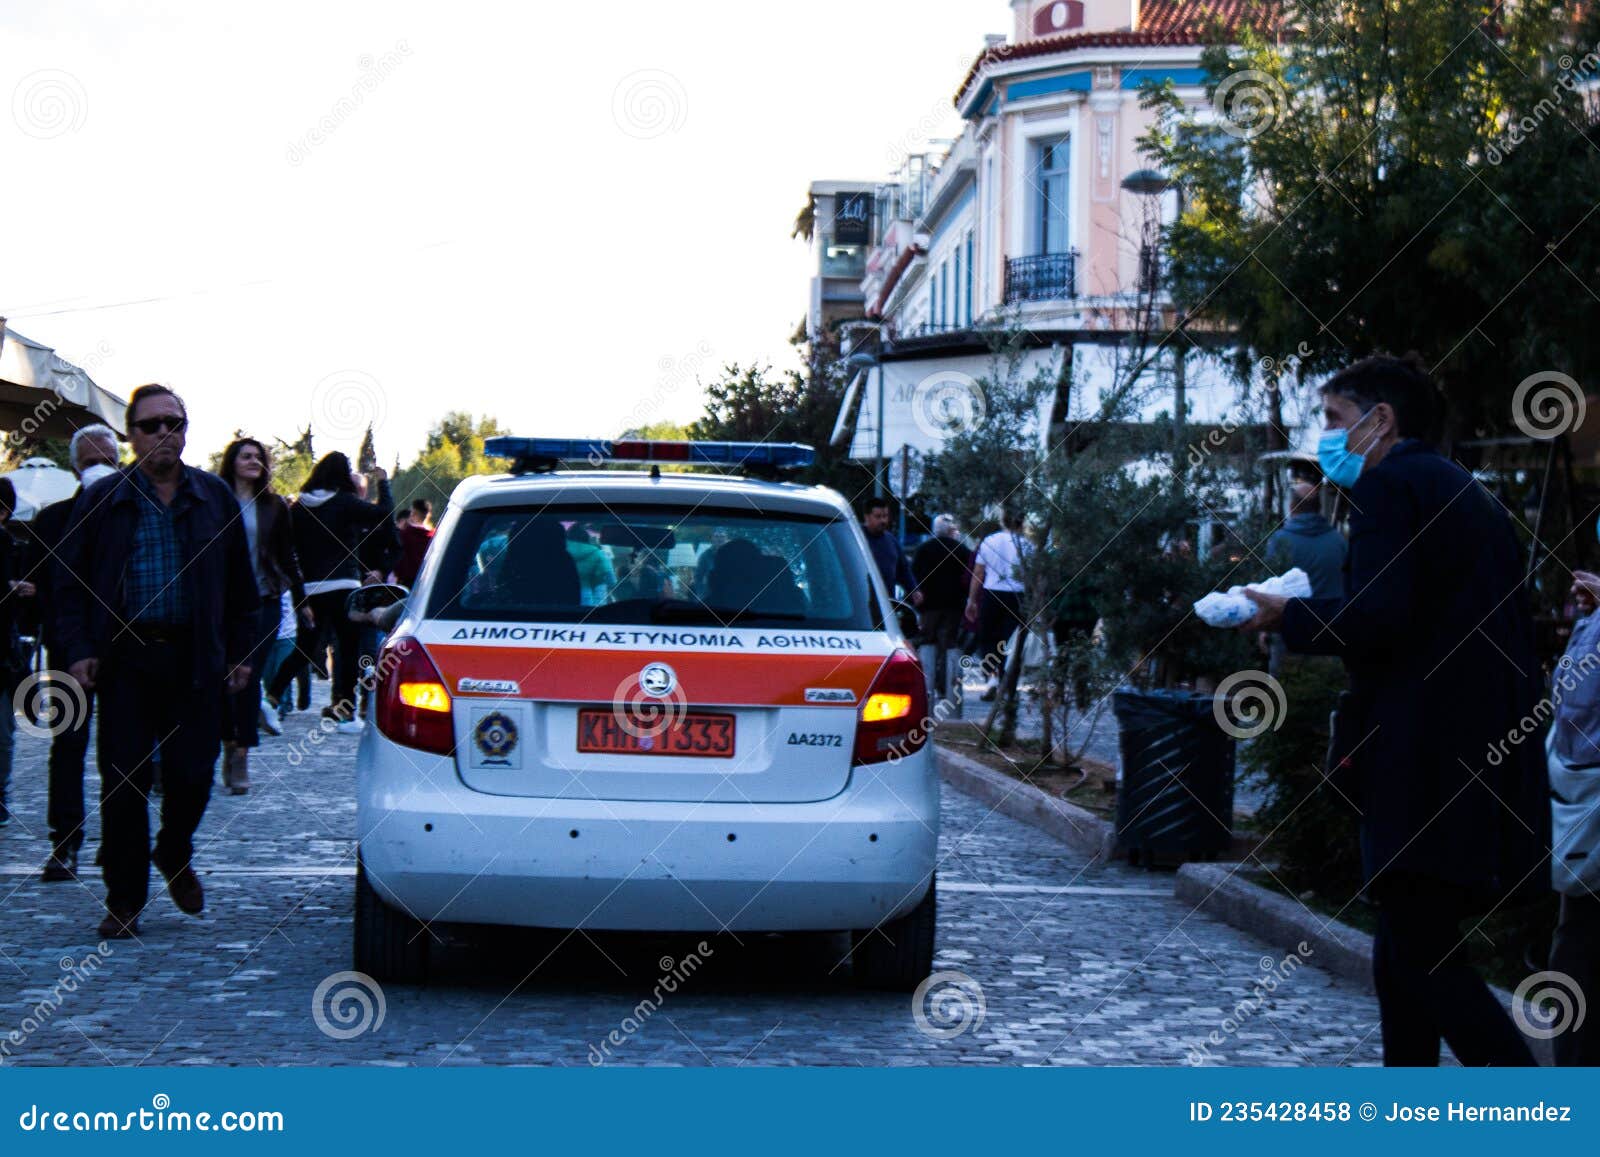 tourism police greece